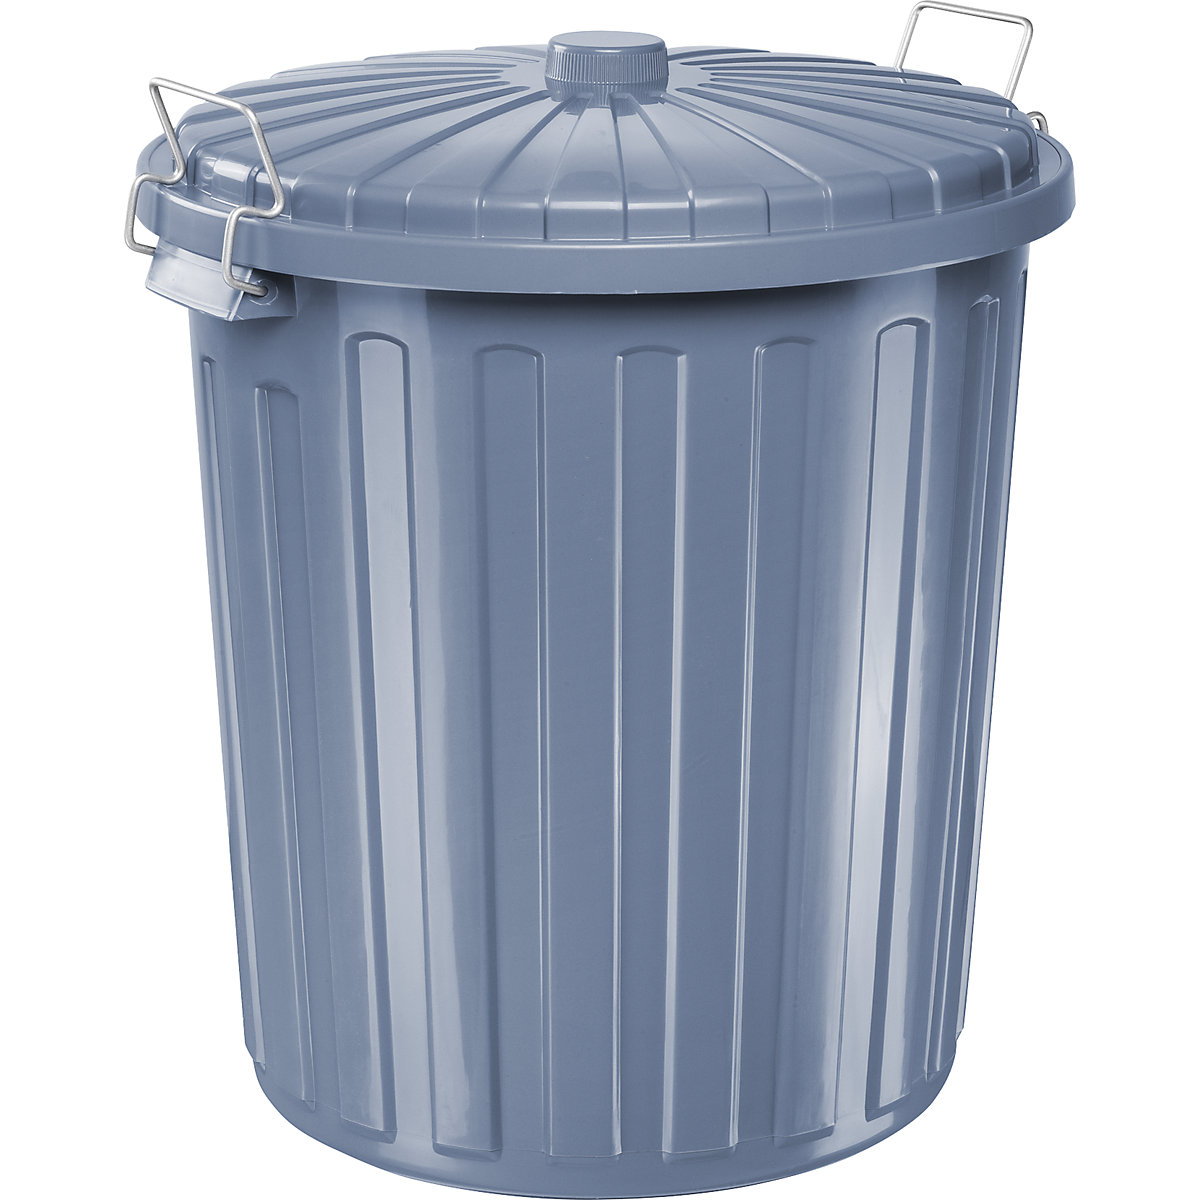 Waste bin with lid